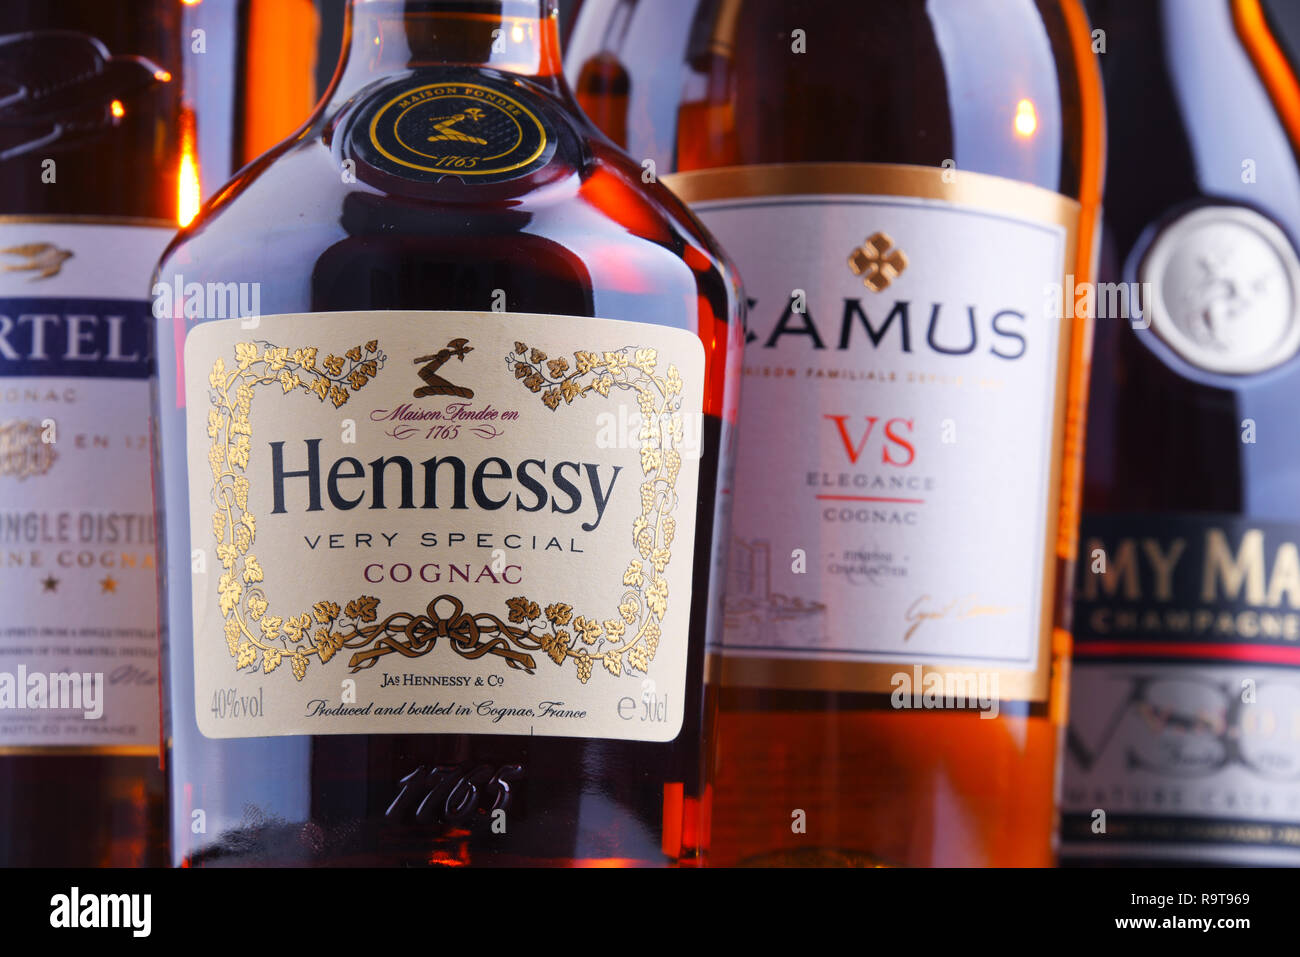 POZNAN, POL   SEP , : Bottles of famous Cognac brands